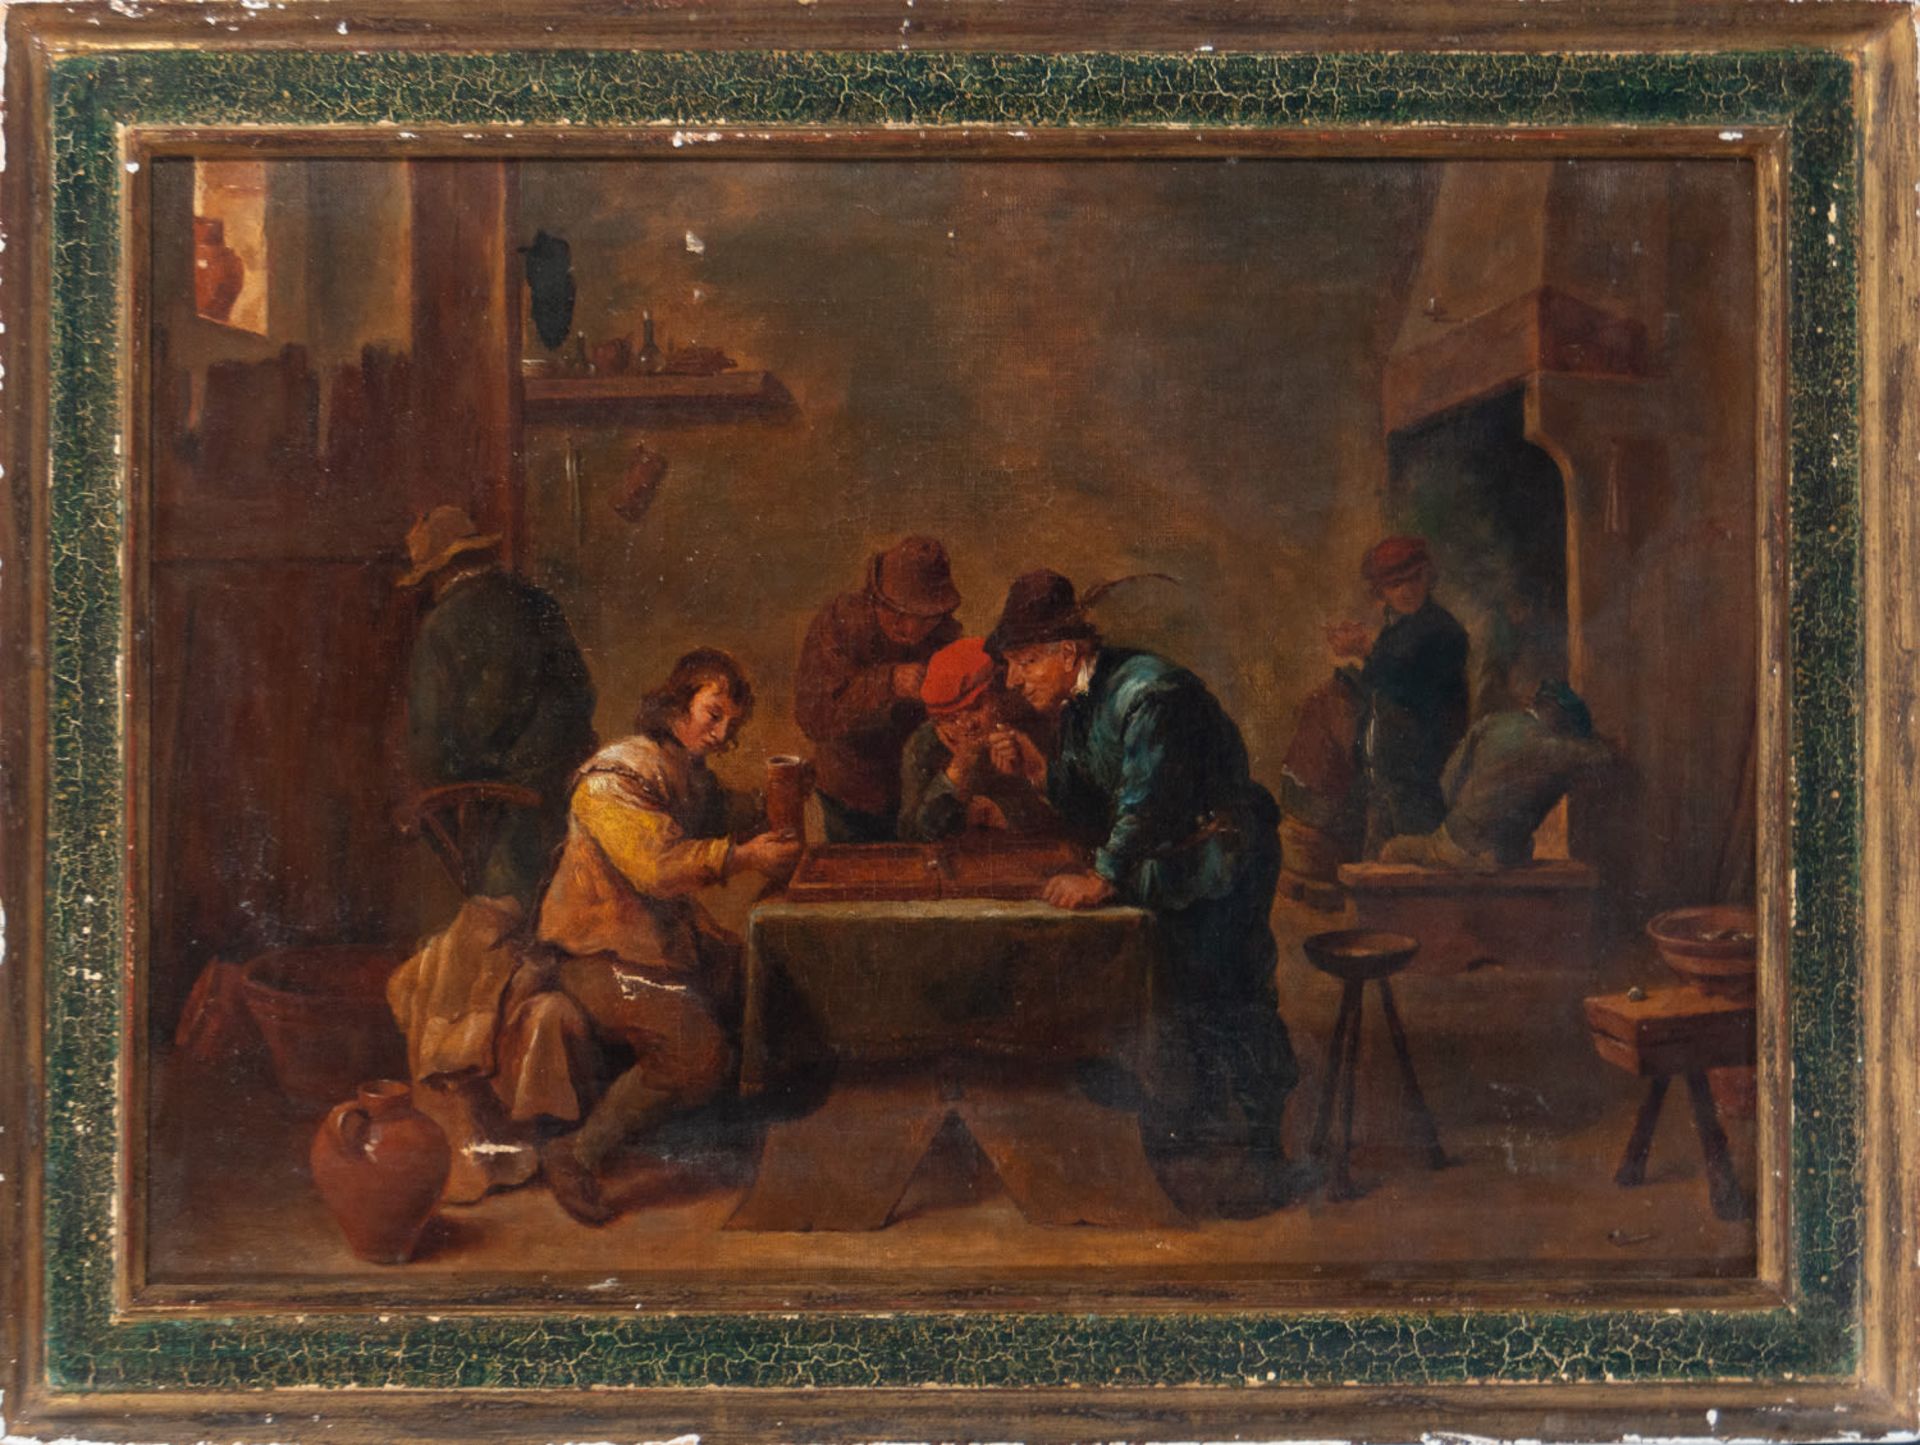 Tavern Scene, 17th Century Dutch School, Circle of David Teniers I